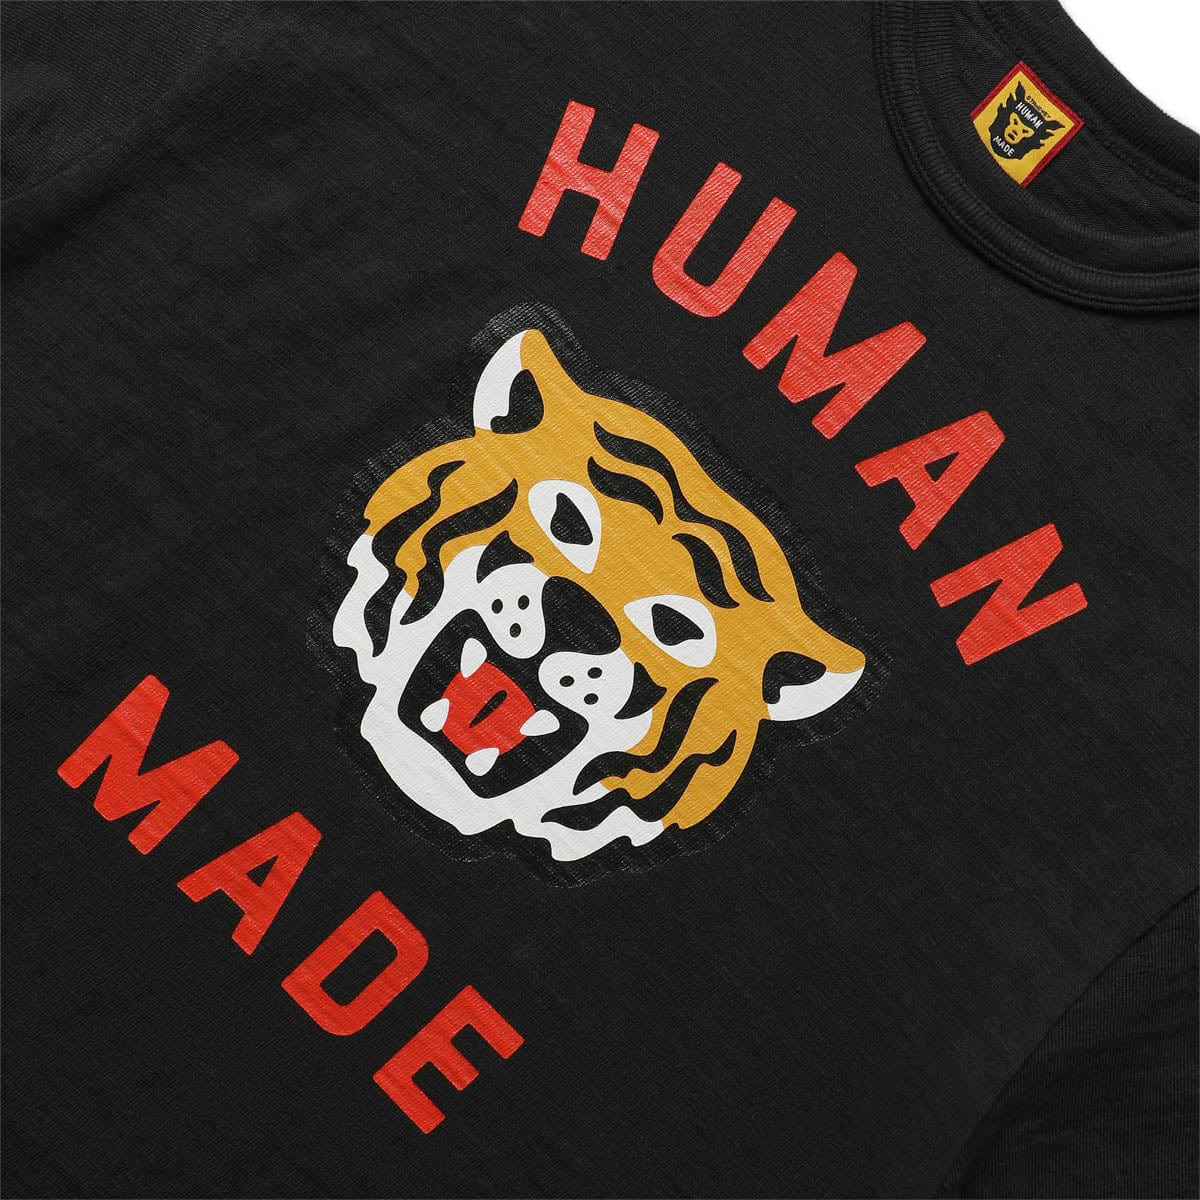 Human Made Graphic T-Shirt